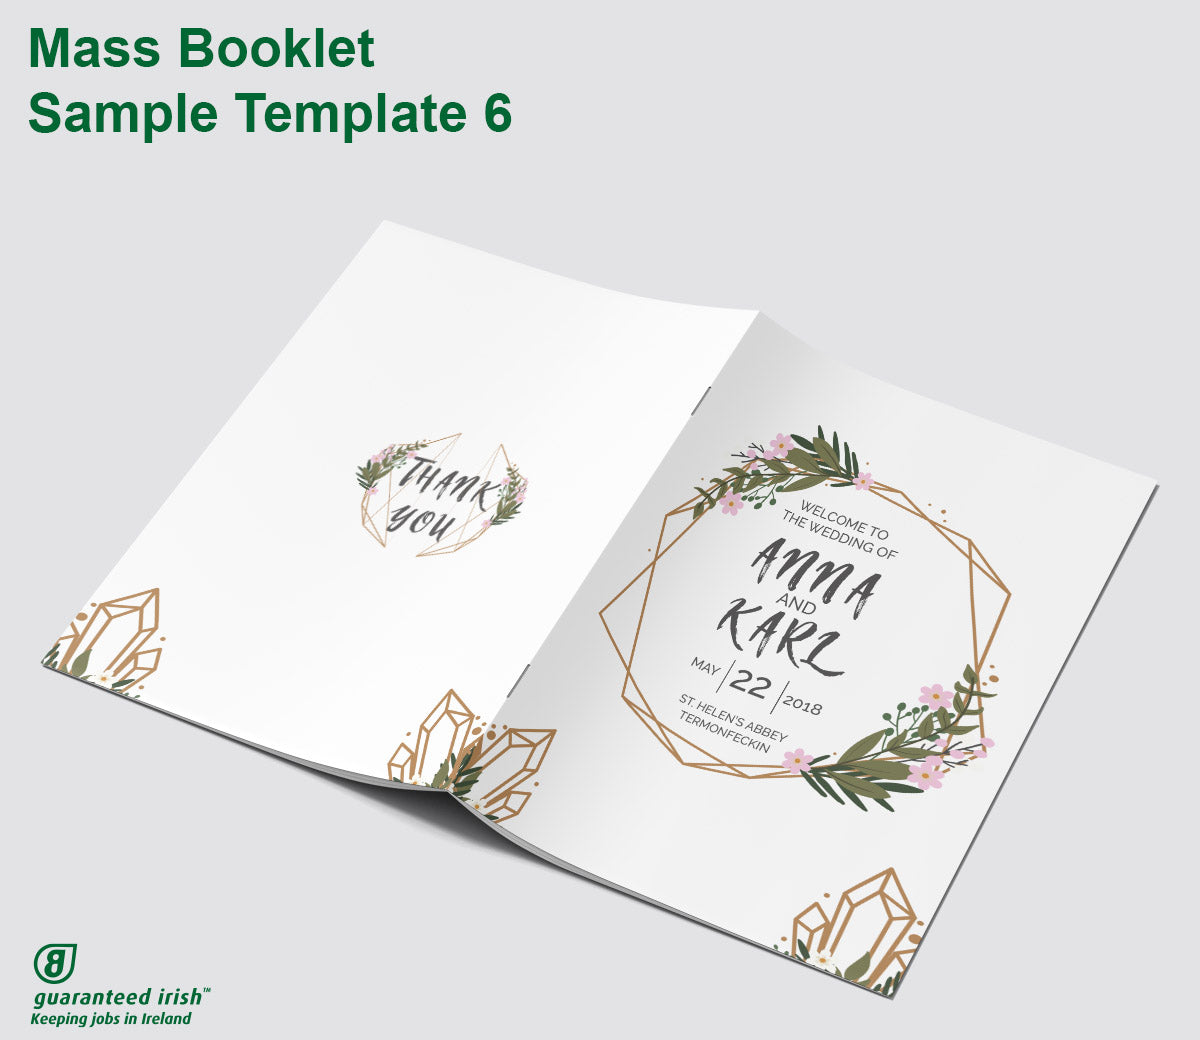 Wedding Mass Booklets - Sample 6